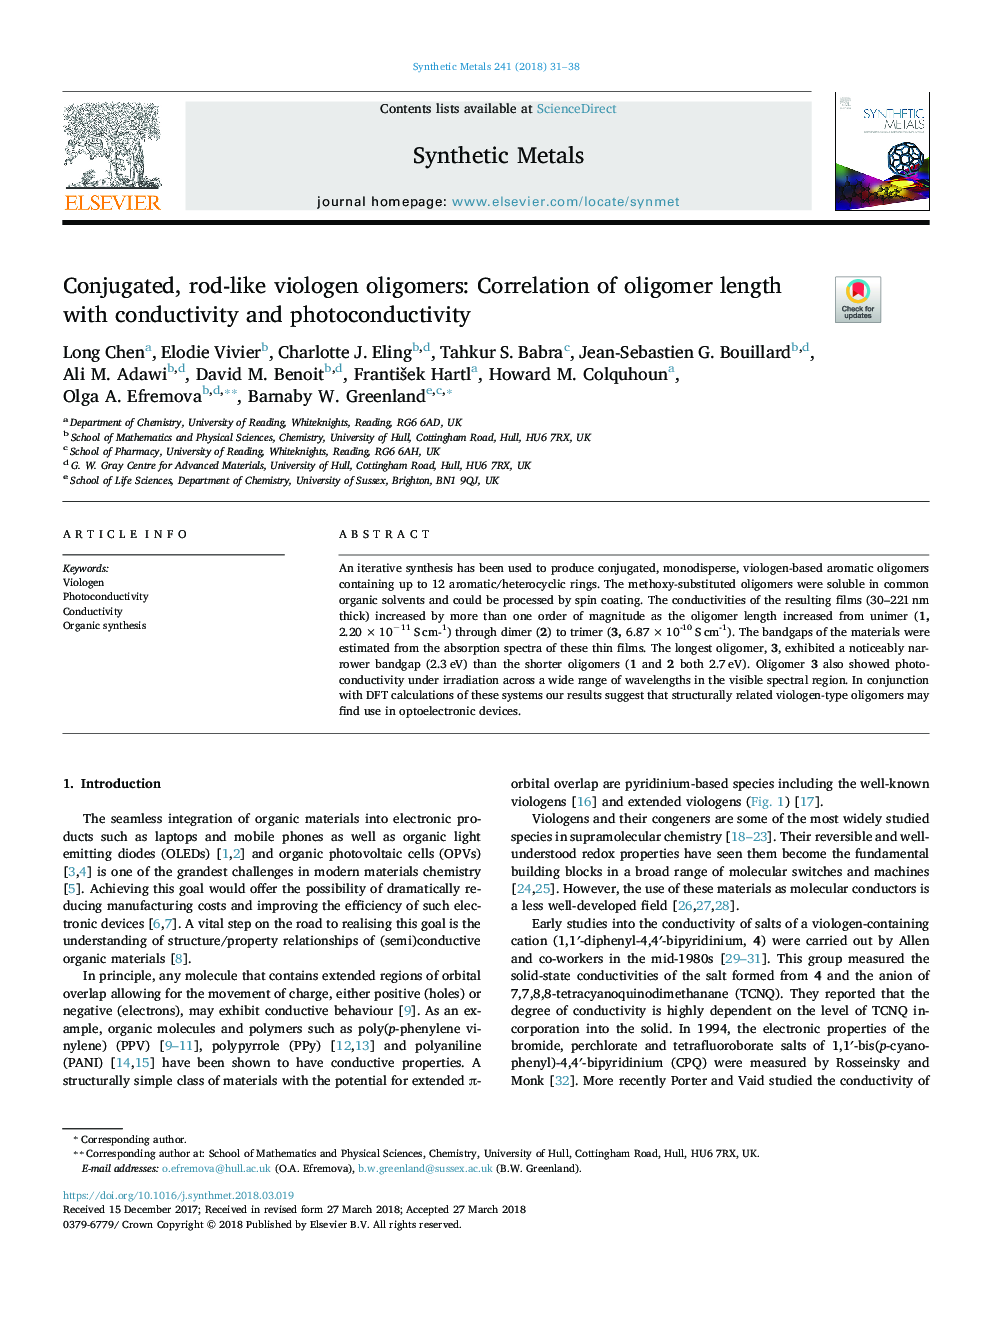 Conjugated, rod-like viologen oligomers: Correlation of oligomer length with conductivity and photoconductivity